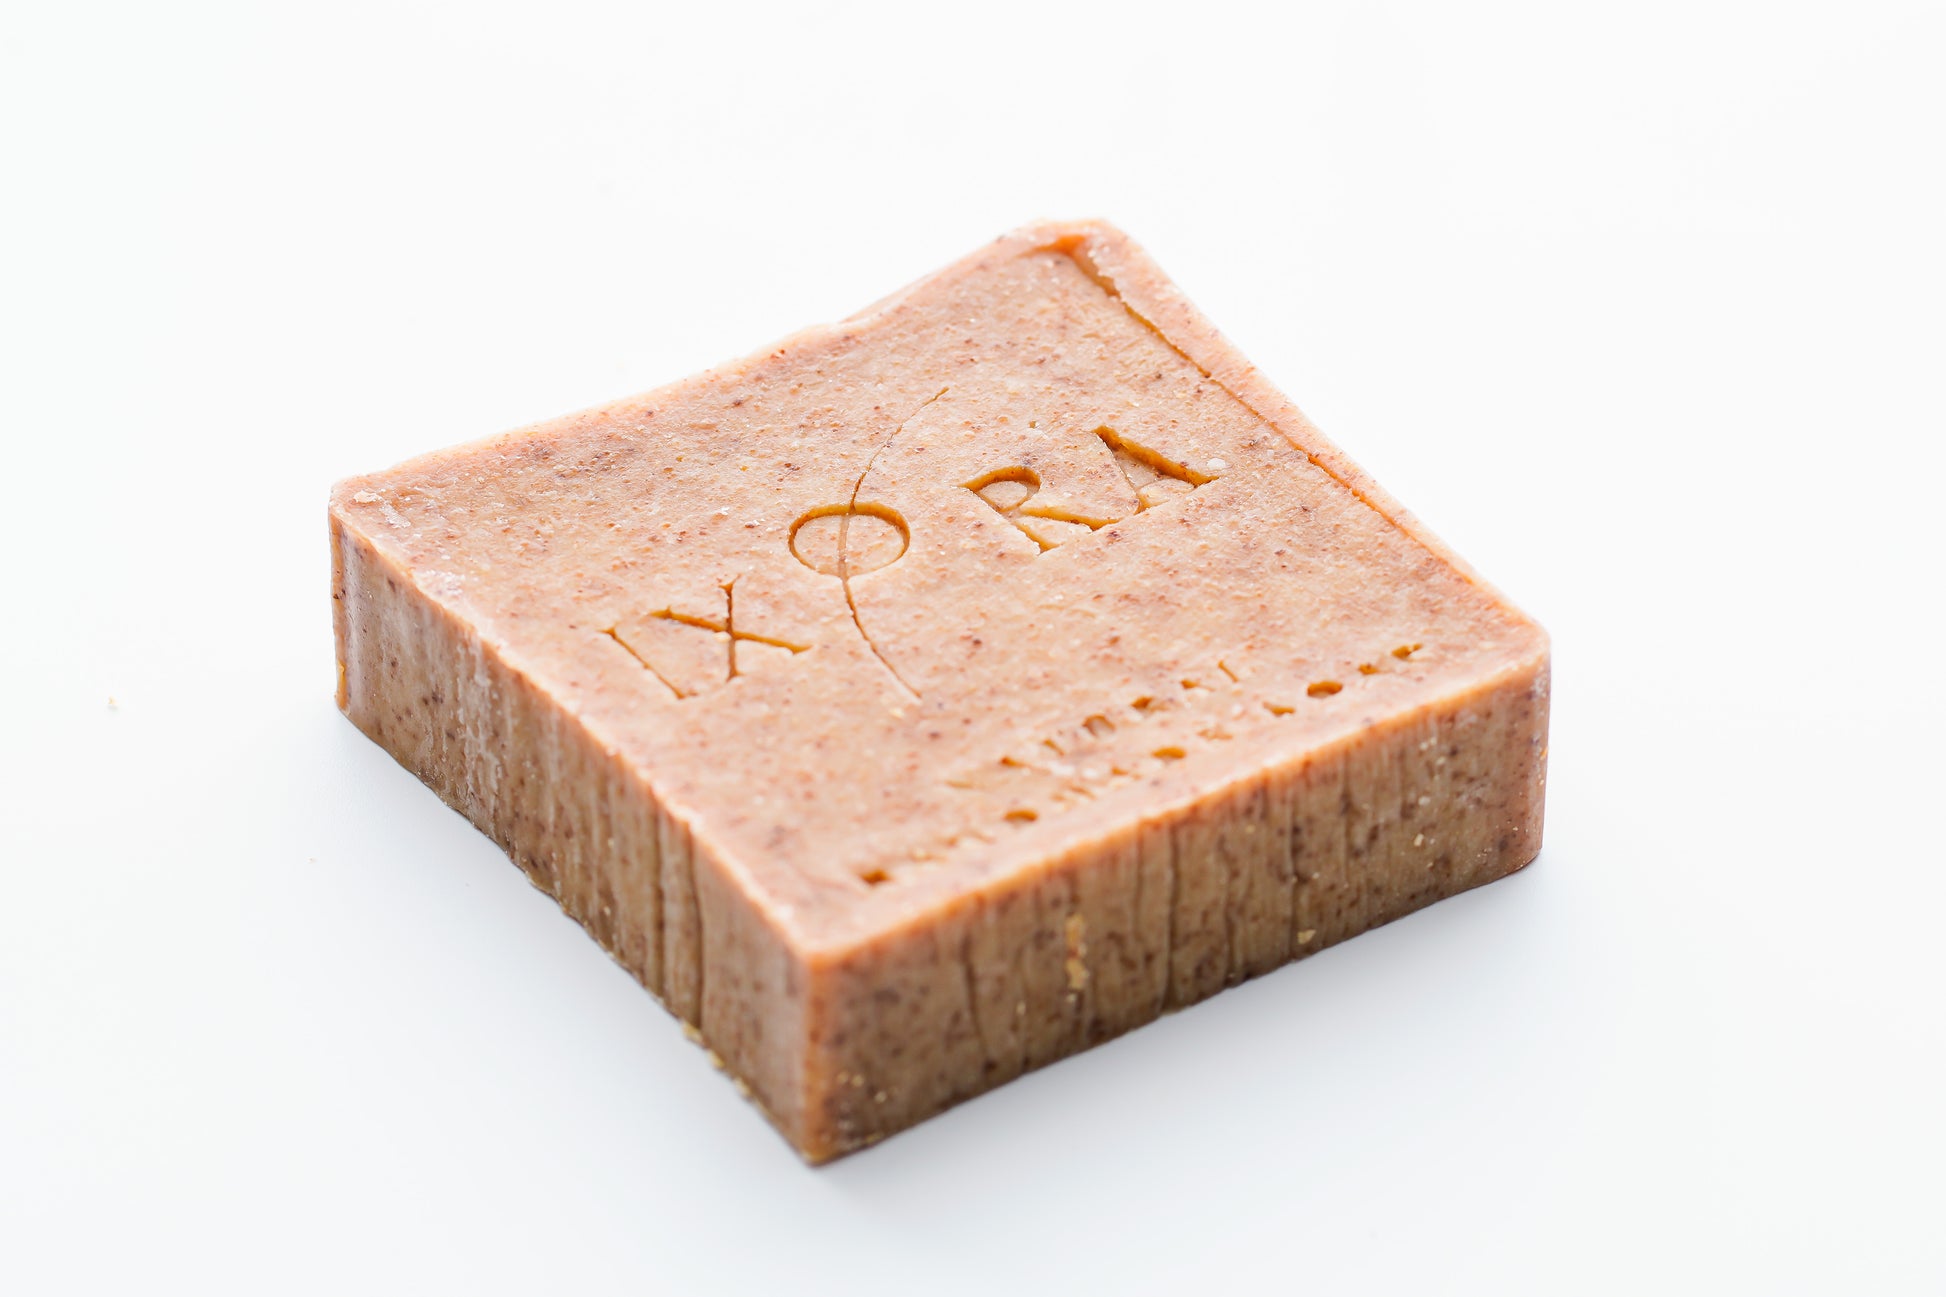 Ixora Curcuma Soap: Brighten, Even Skin Tone, and Soothe Skin with Natural Antiseptic Properties Ixora Organic Beauty